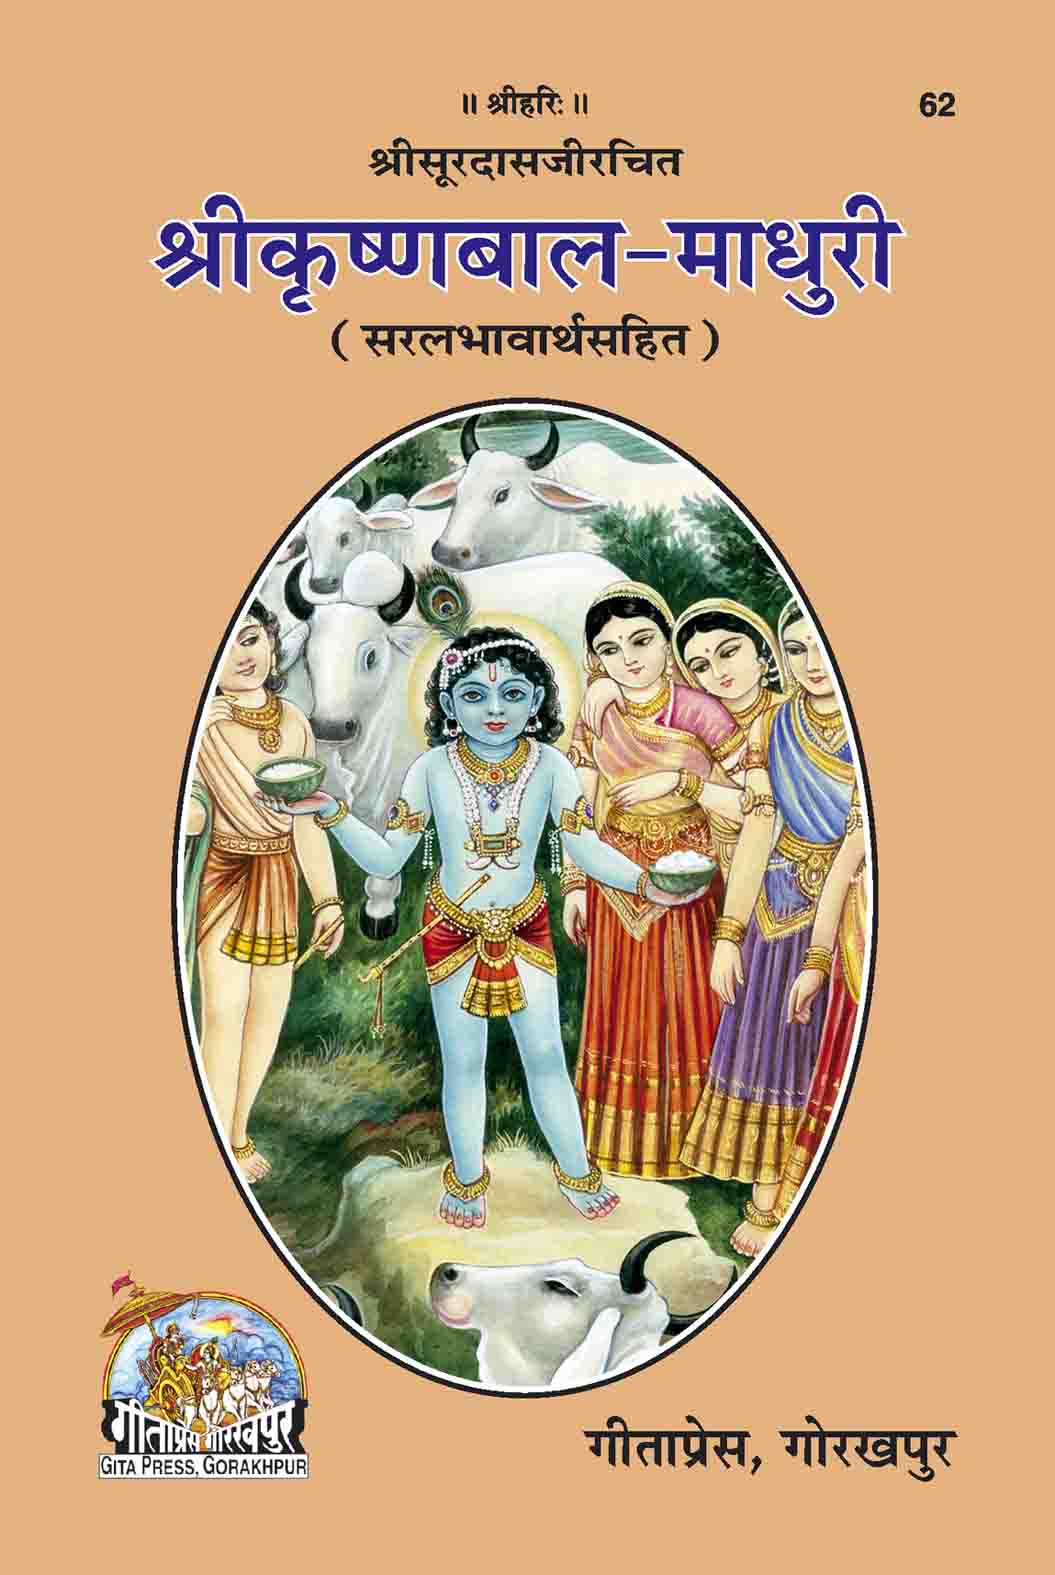 Shri Krishna Bal Madhuri by Gita Press